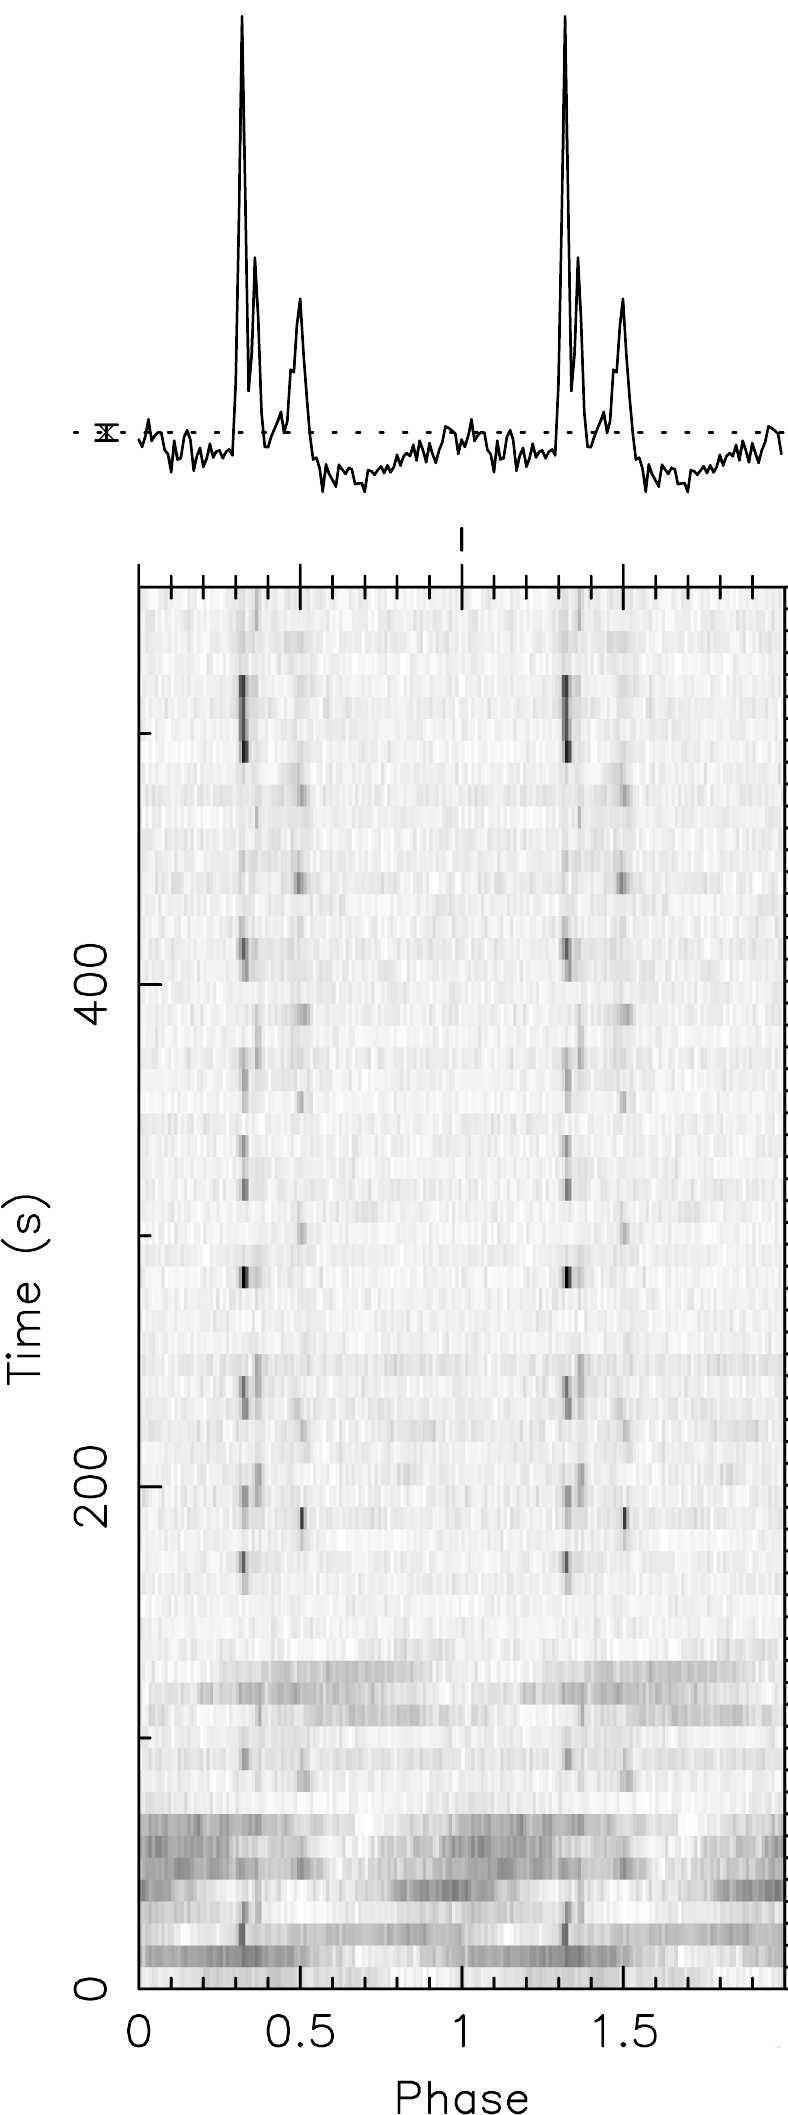 32 Fig. 11. Average pulse profile (top) and subintegration vs. pulse phase (bottom) for a confirmation observation of PSR J1941+01 at 327 MHz.